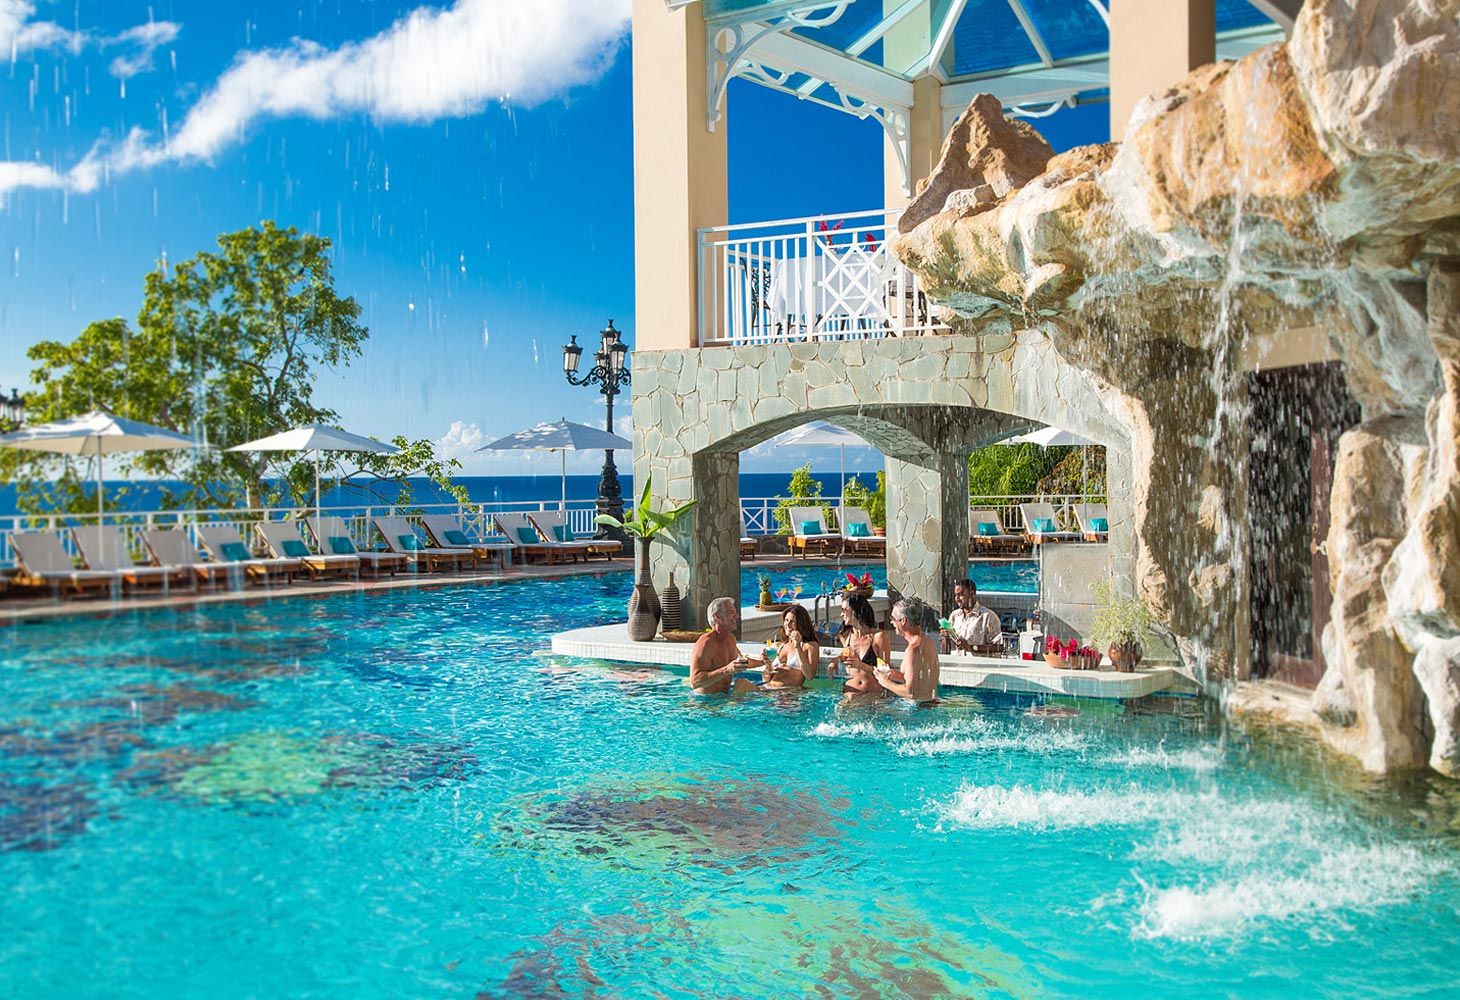 Swimming pool at all-inclusive resort Sandals Regency La Toc